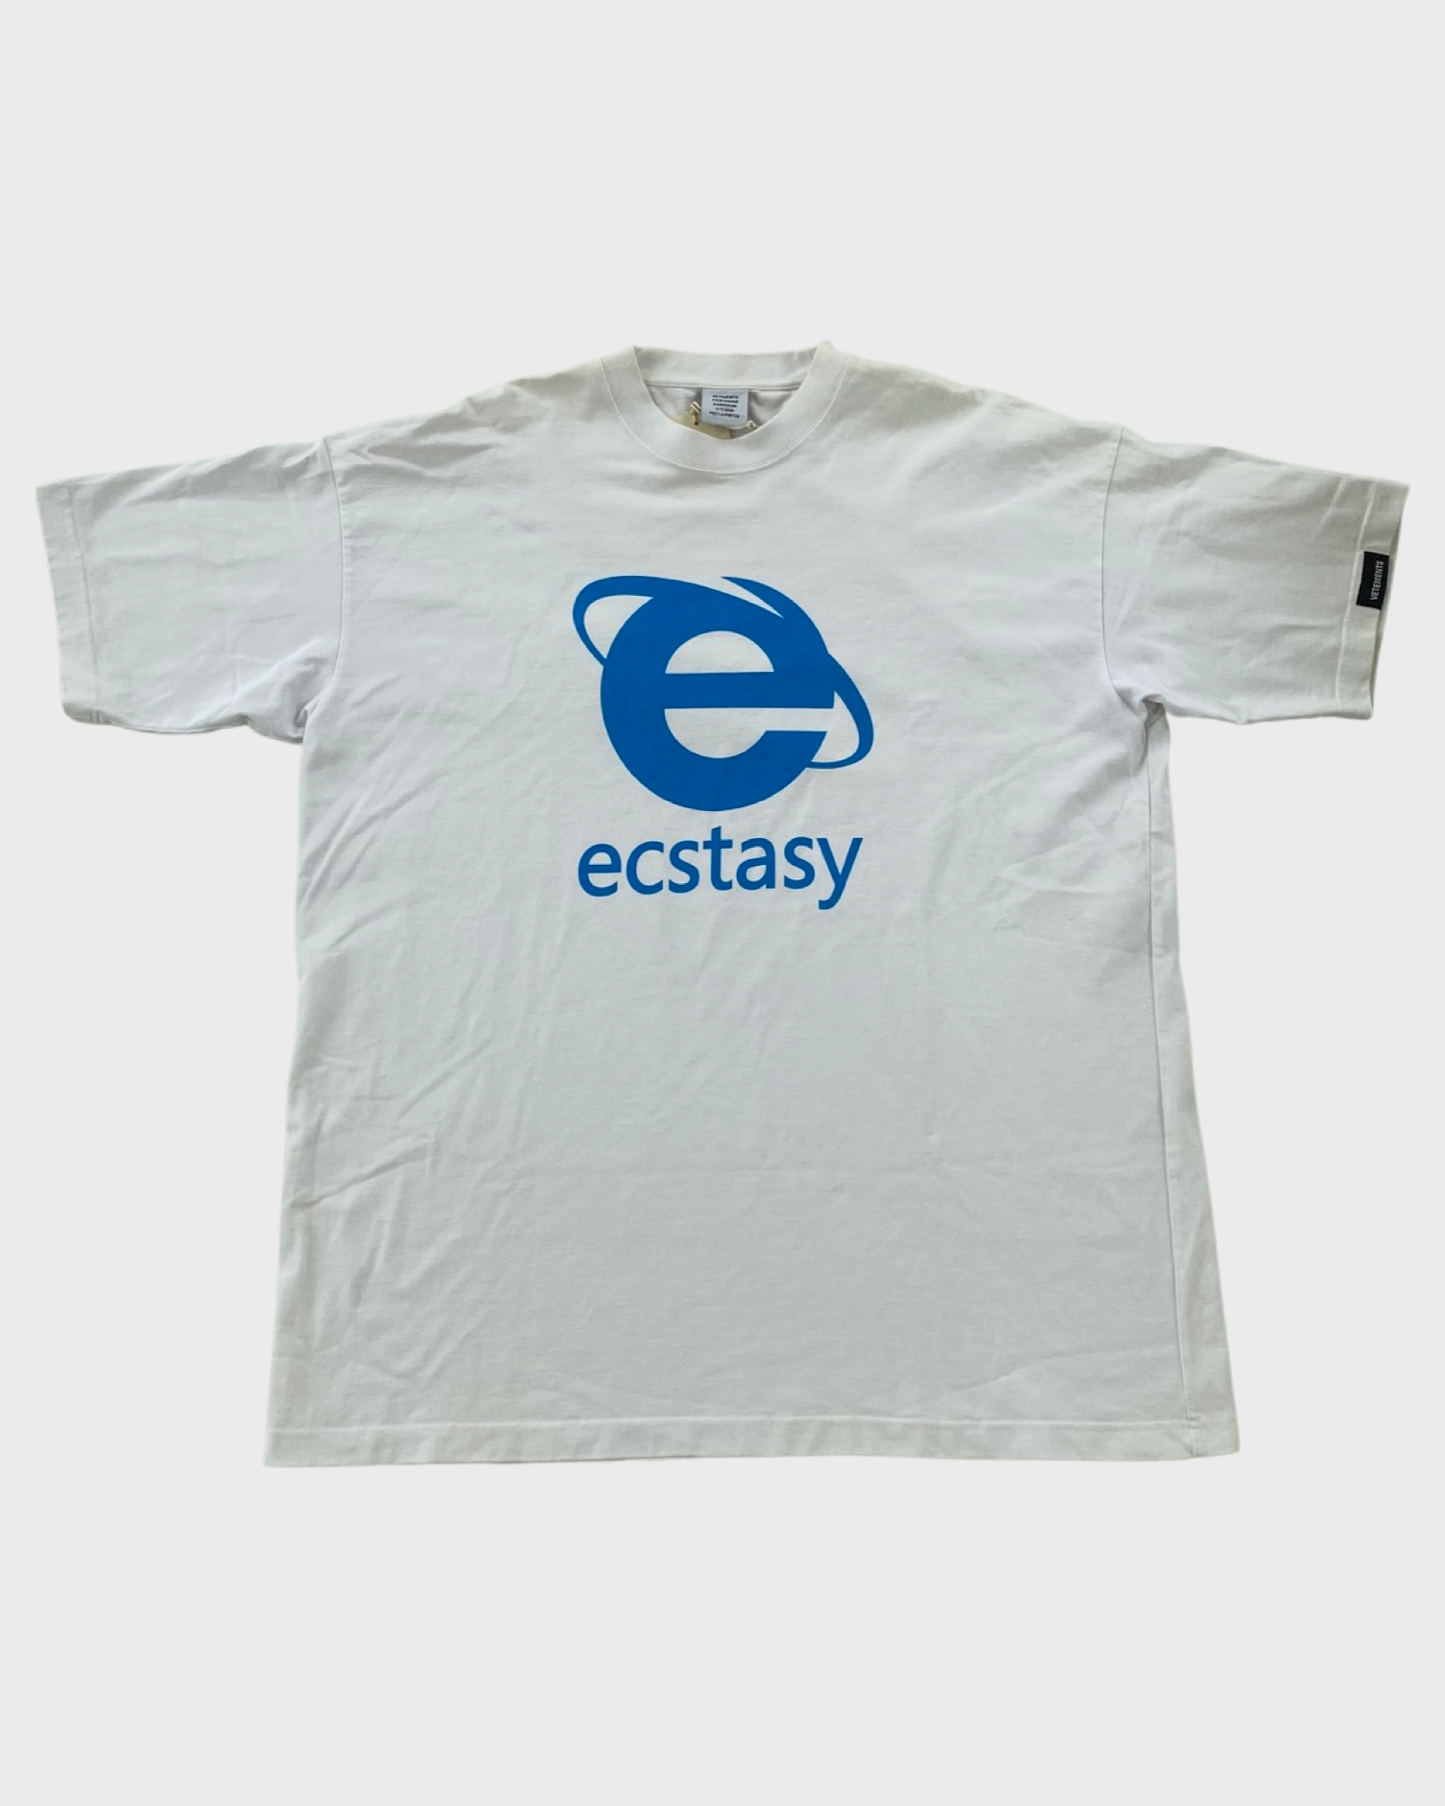 Vetements SS20 runway internet explorer ecstasy T-Shirt SZ:S